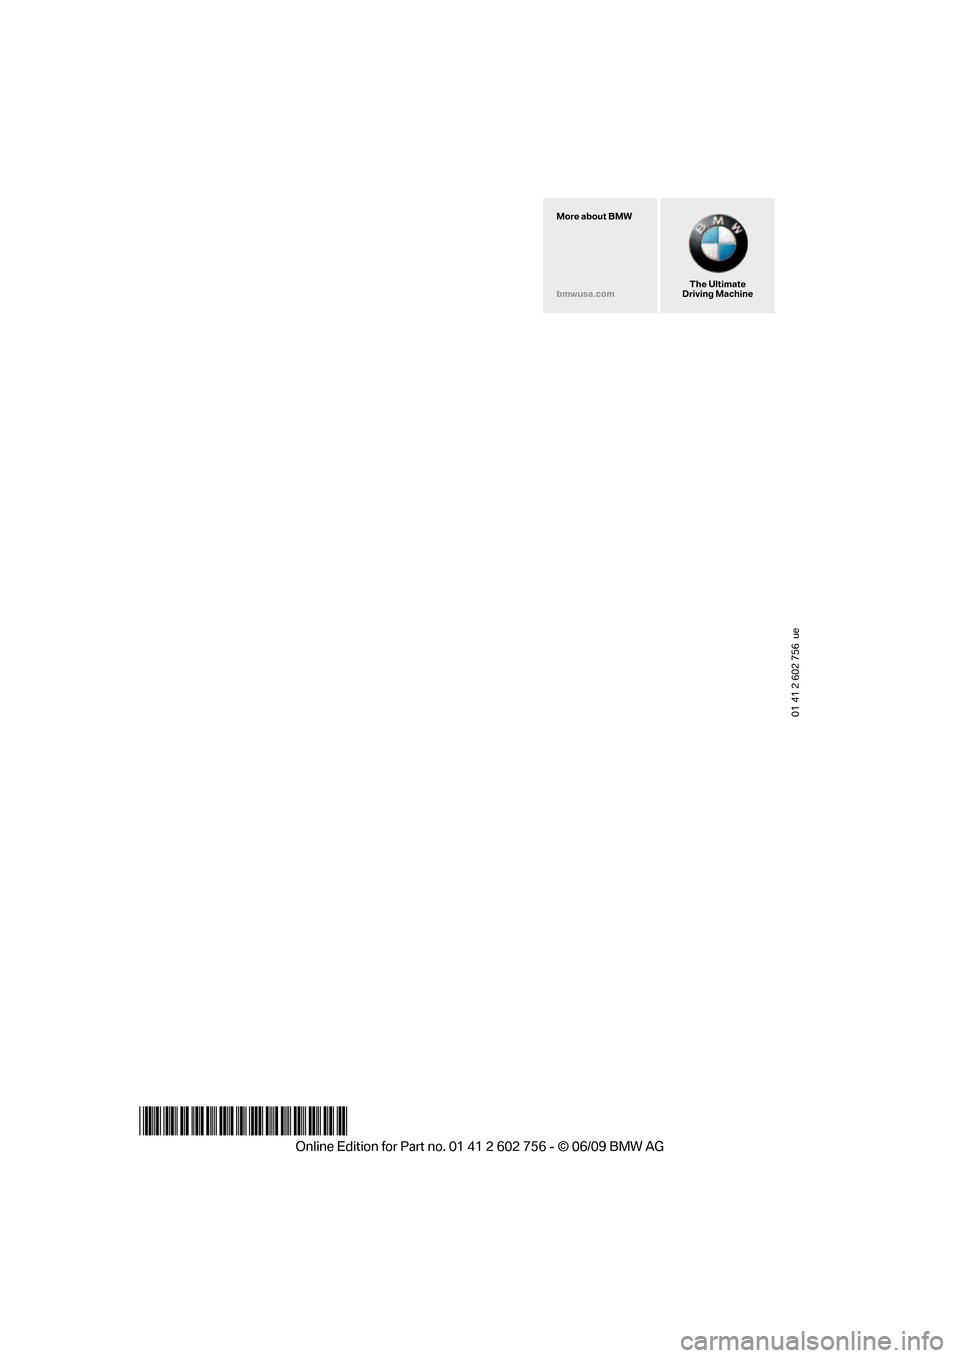 BMW X6M 2010 E71 Owners Manual 01 41 2 602 756  ue
*BL2602756004*
The Ultimate
Driving Machine More about BMW
bmwusa.com
ba8_e70ag.book  Seite 298  Freitag, 5. Juni 2009  11:42 11 